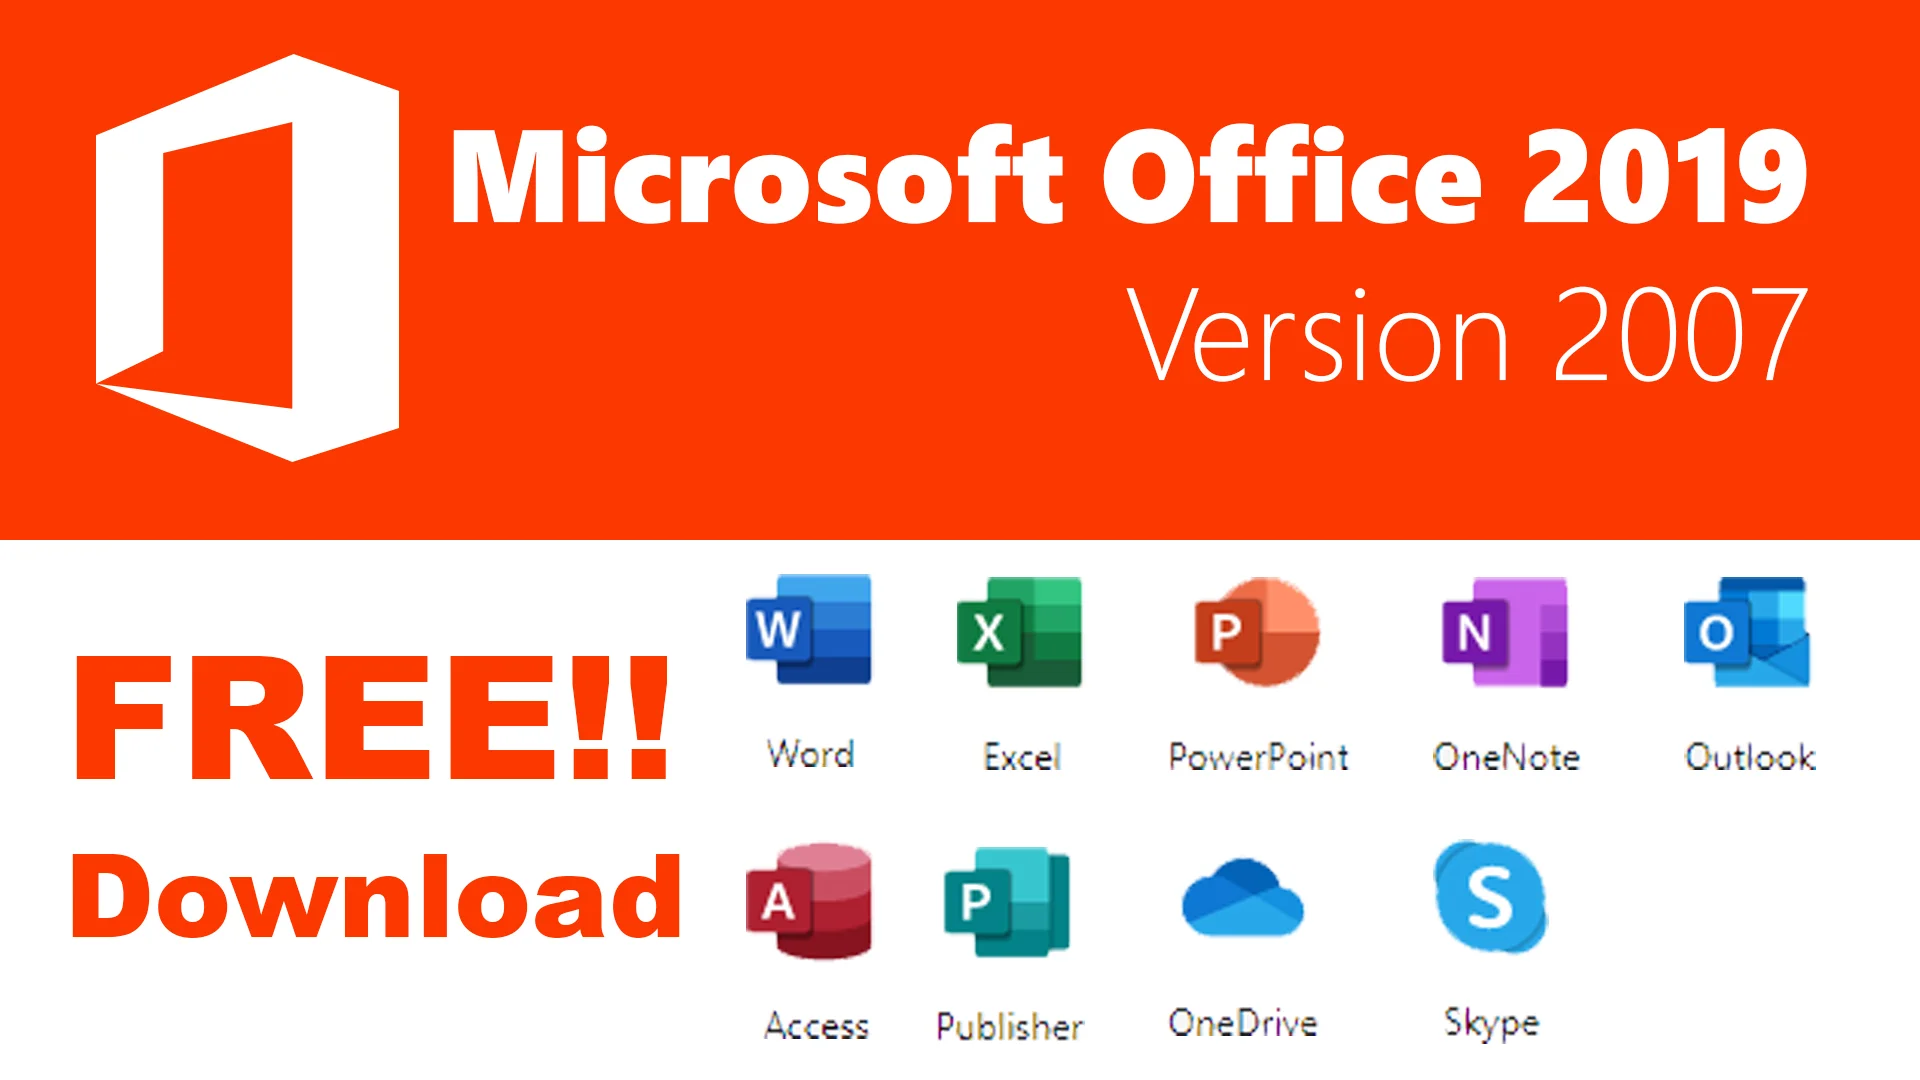 Free Download Microsoft Office 2019 v2007 - Latest Version